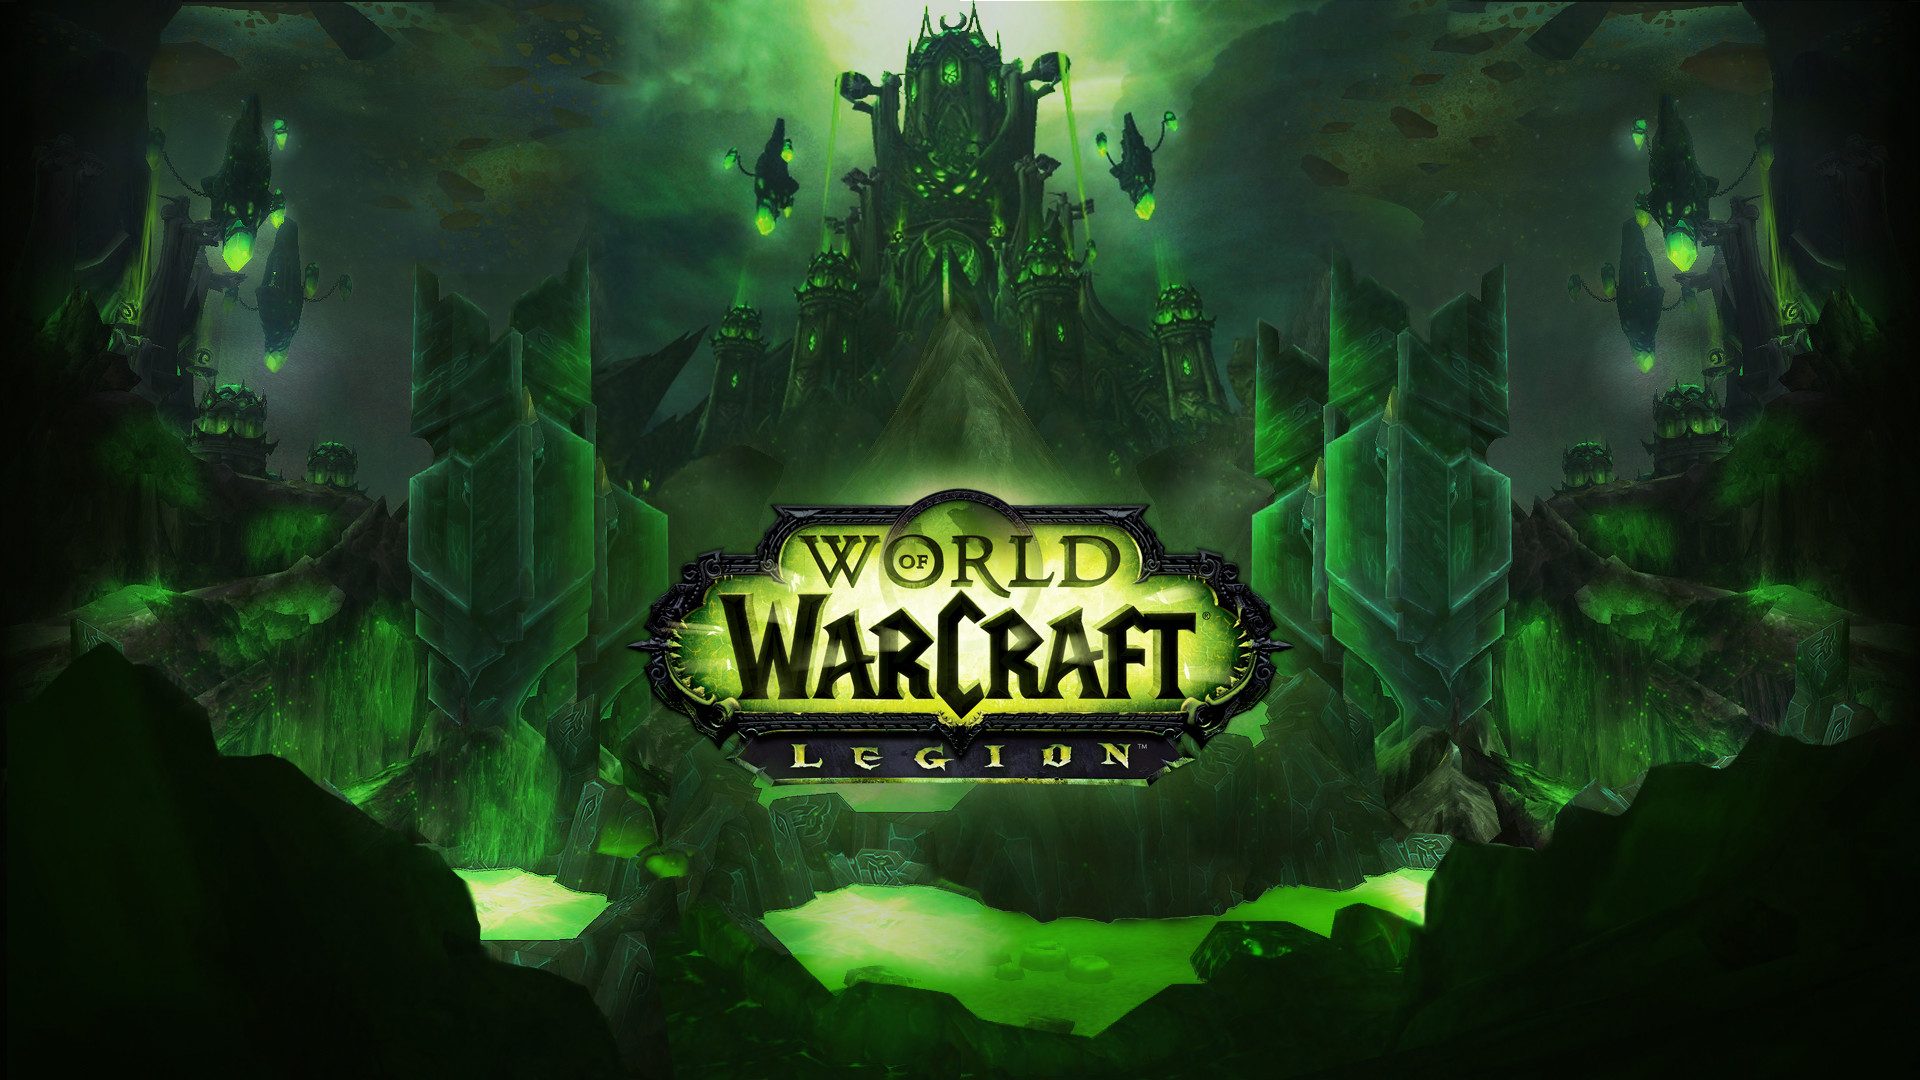 1920x1080 ... World of Warcraft: Legion wallpaper by Mokuin